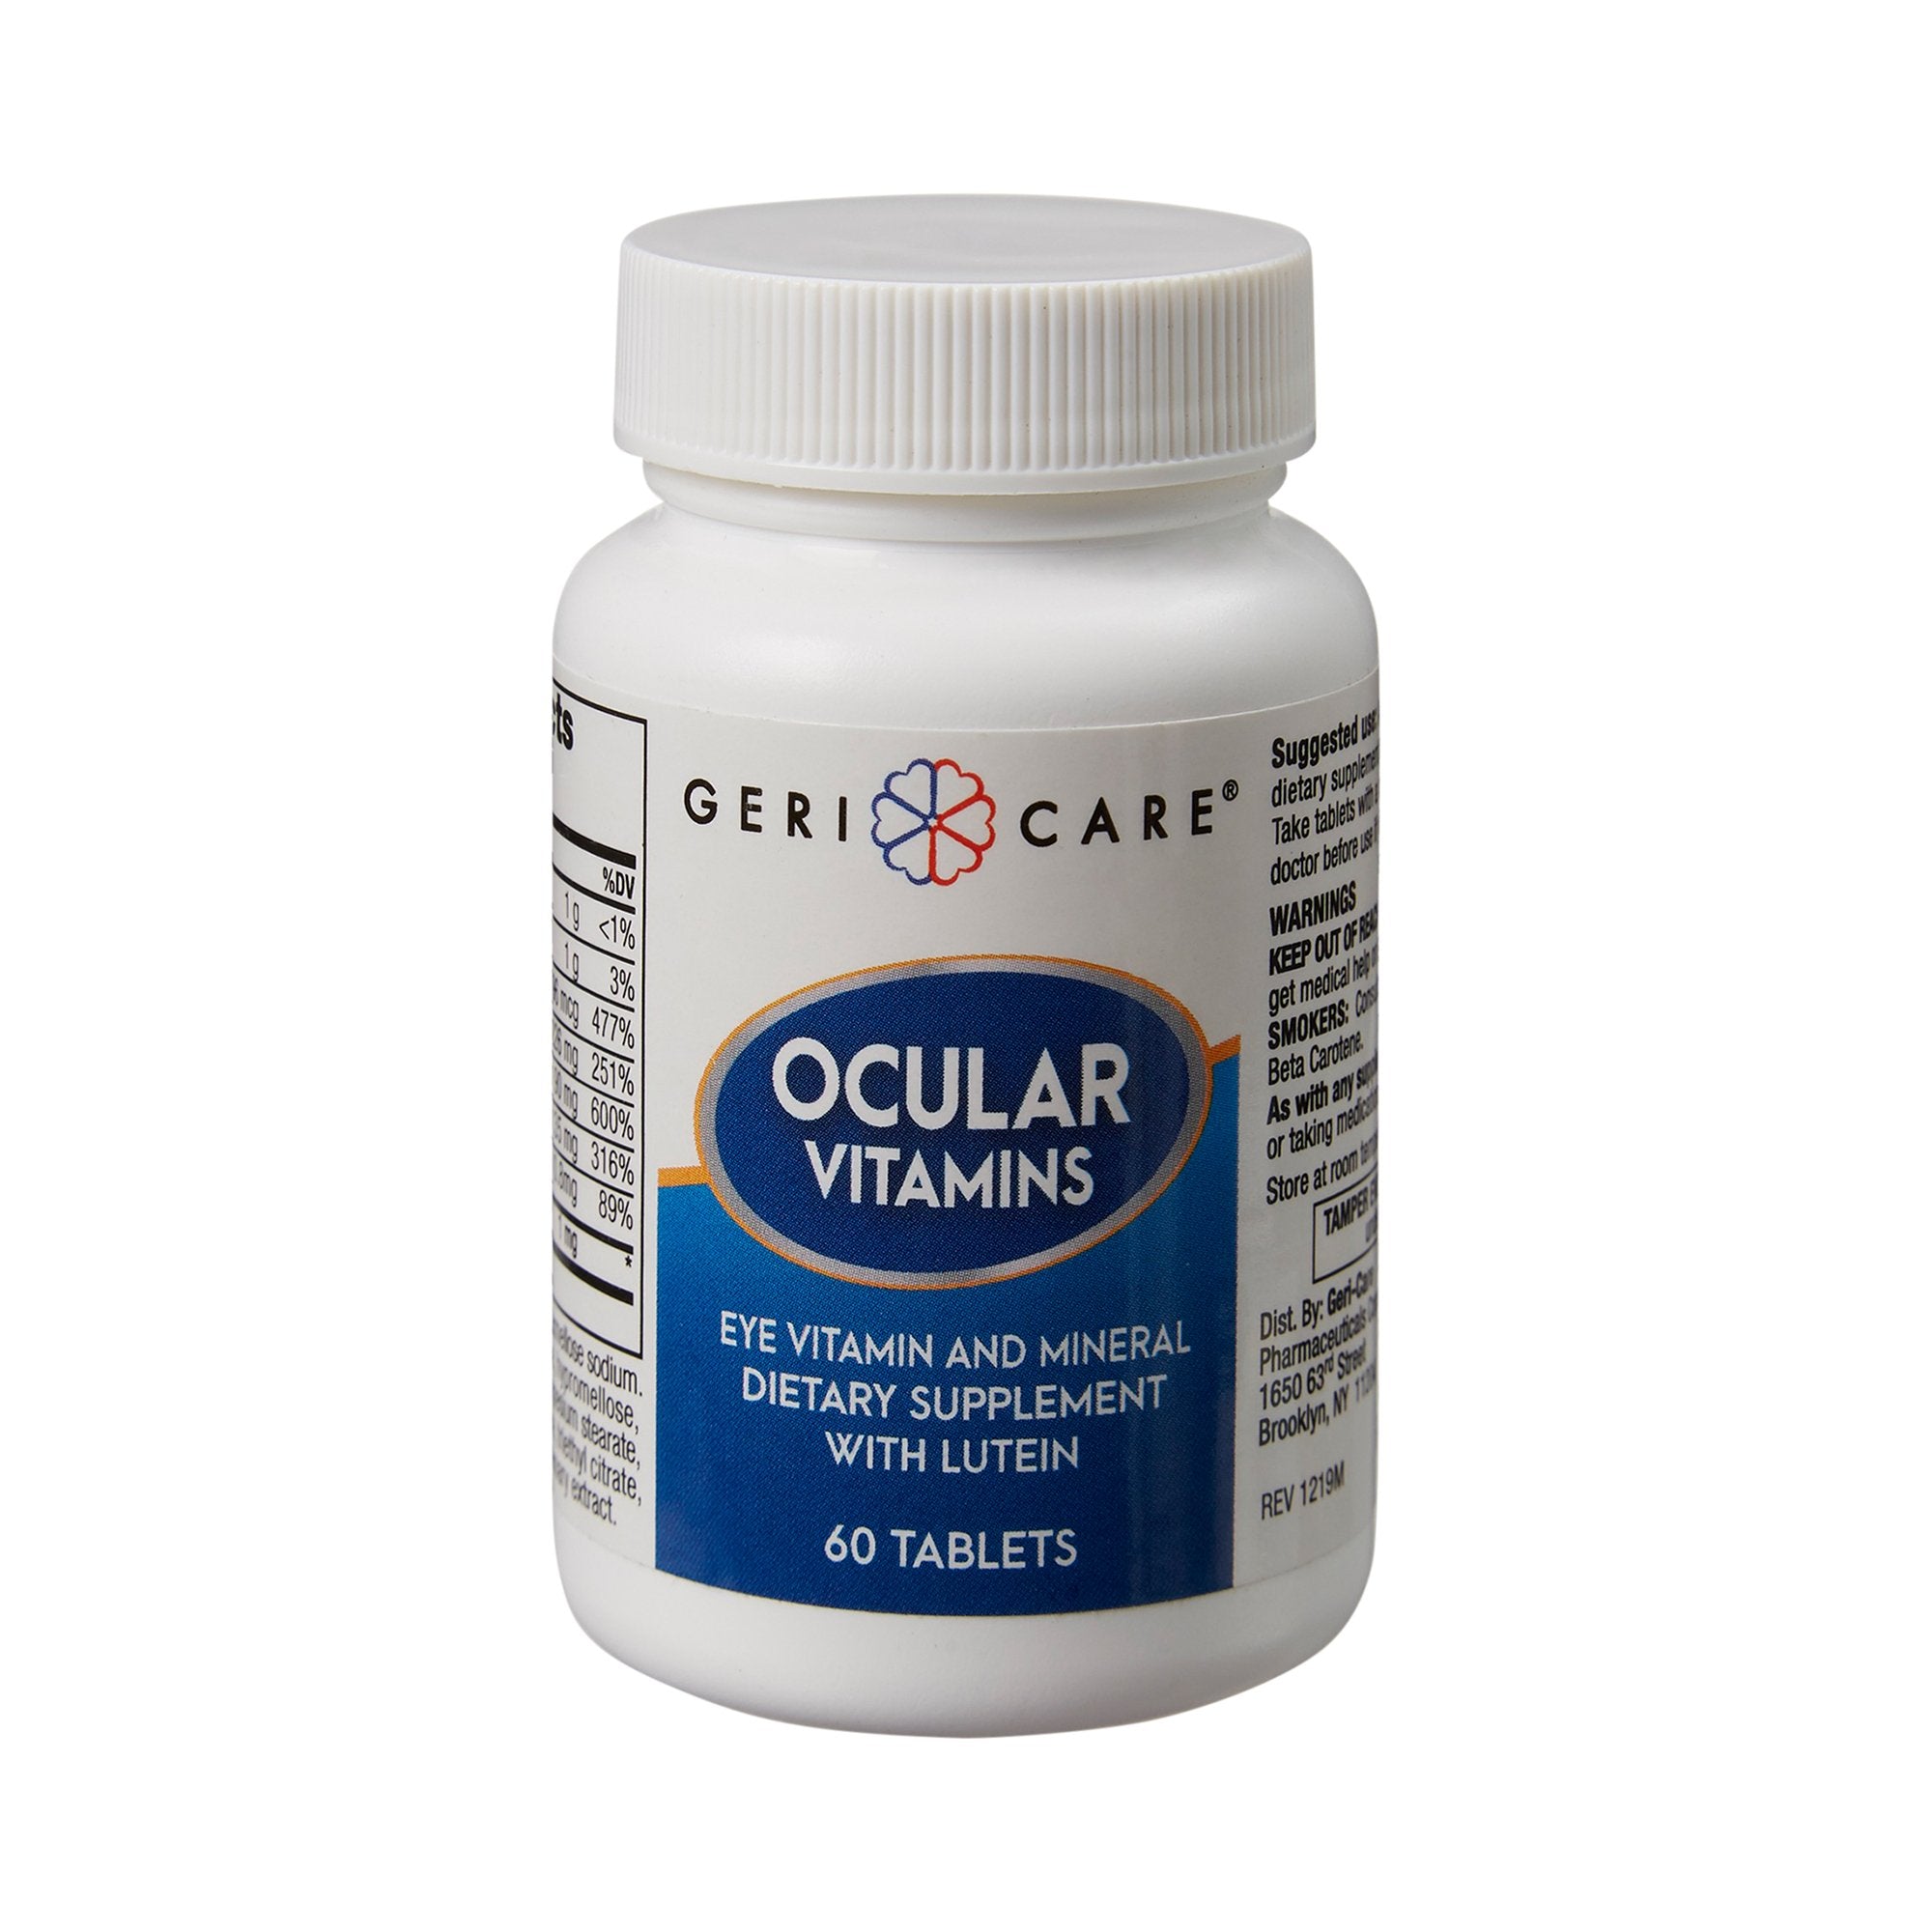 Eye Vitamin Supplement Geri-Care Vitamin A / Ascorbic Acid / Vitamin E 14320 IU - 226 mg - 200 IU Strength Tablet 60 per Bottle